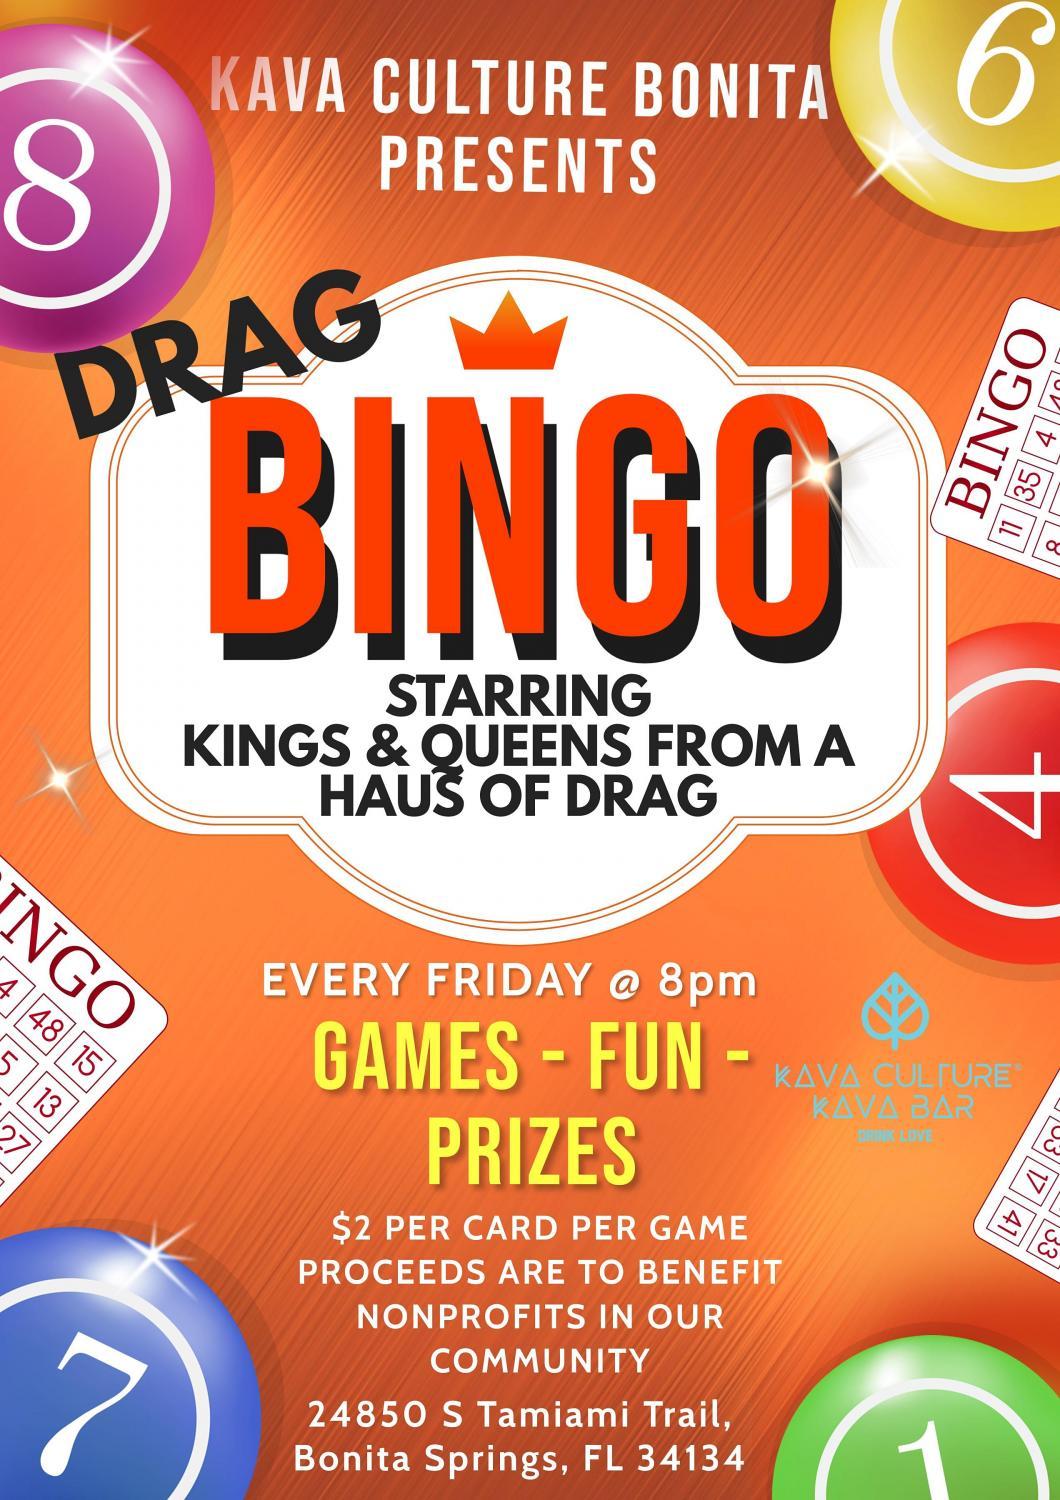 Drag Bingo in Bonita!!!
Fri Dec 16, 8:00 PM - Fri Dec 16, 10:00 PM
in 42 days